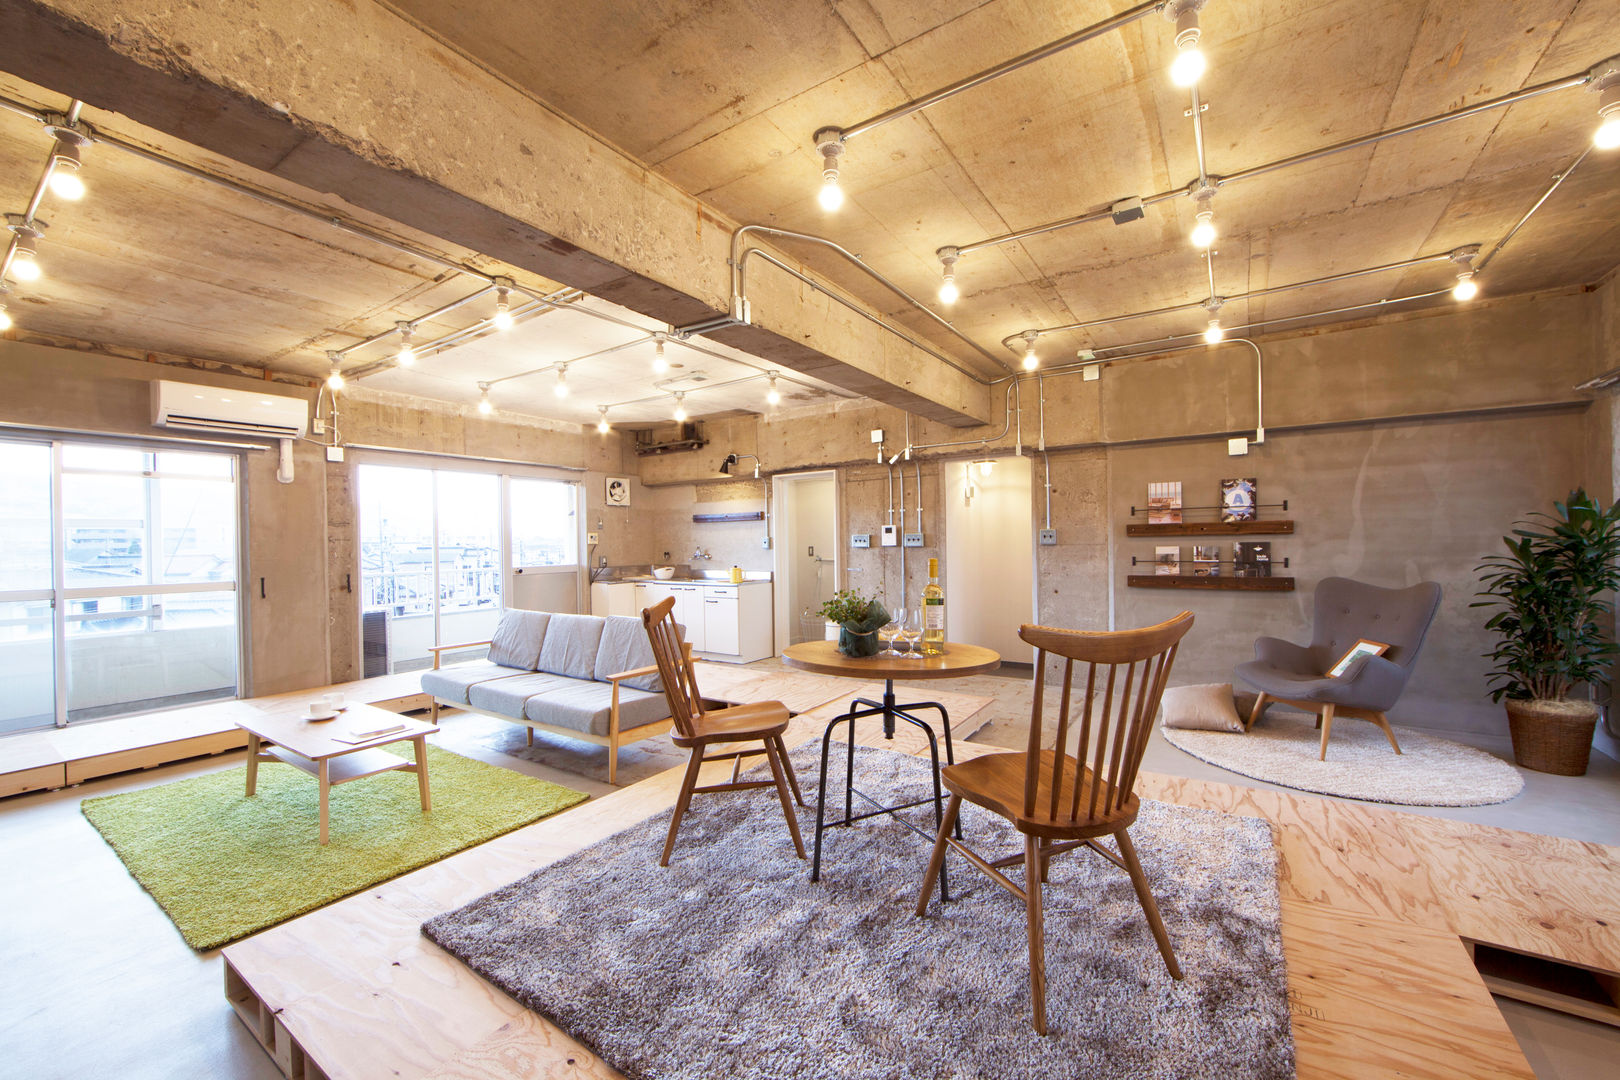 【Renotta】求めるままに組み替えられる部屋, 株式会社クラスコデザインスタジオ 株式会社クラスコデザインスタジオ Modern living room